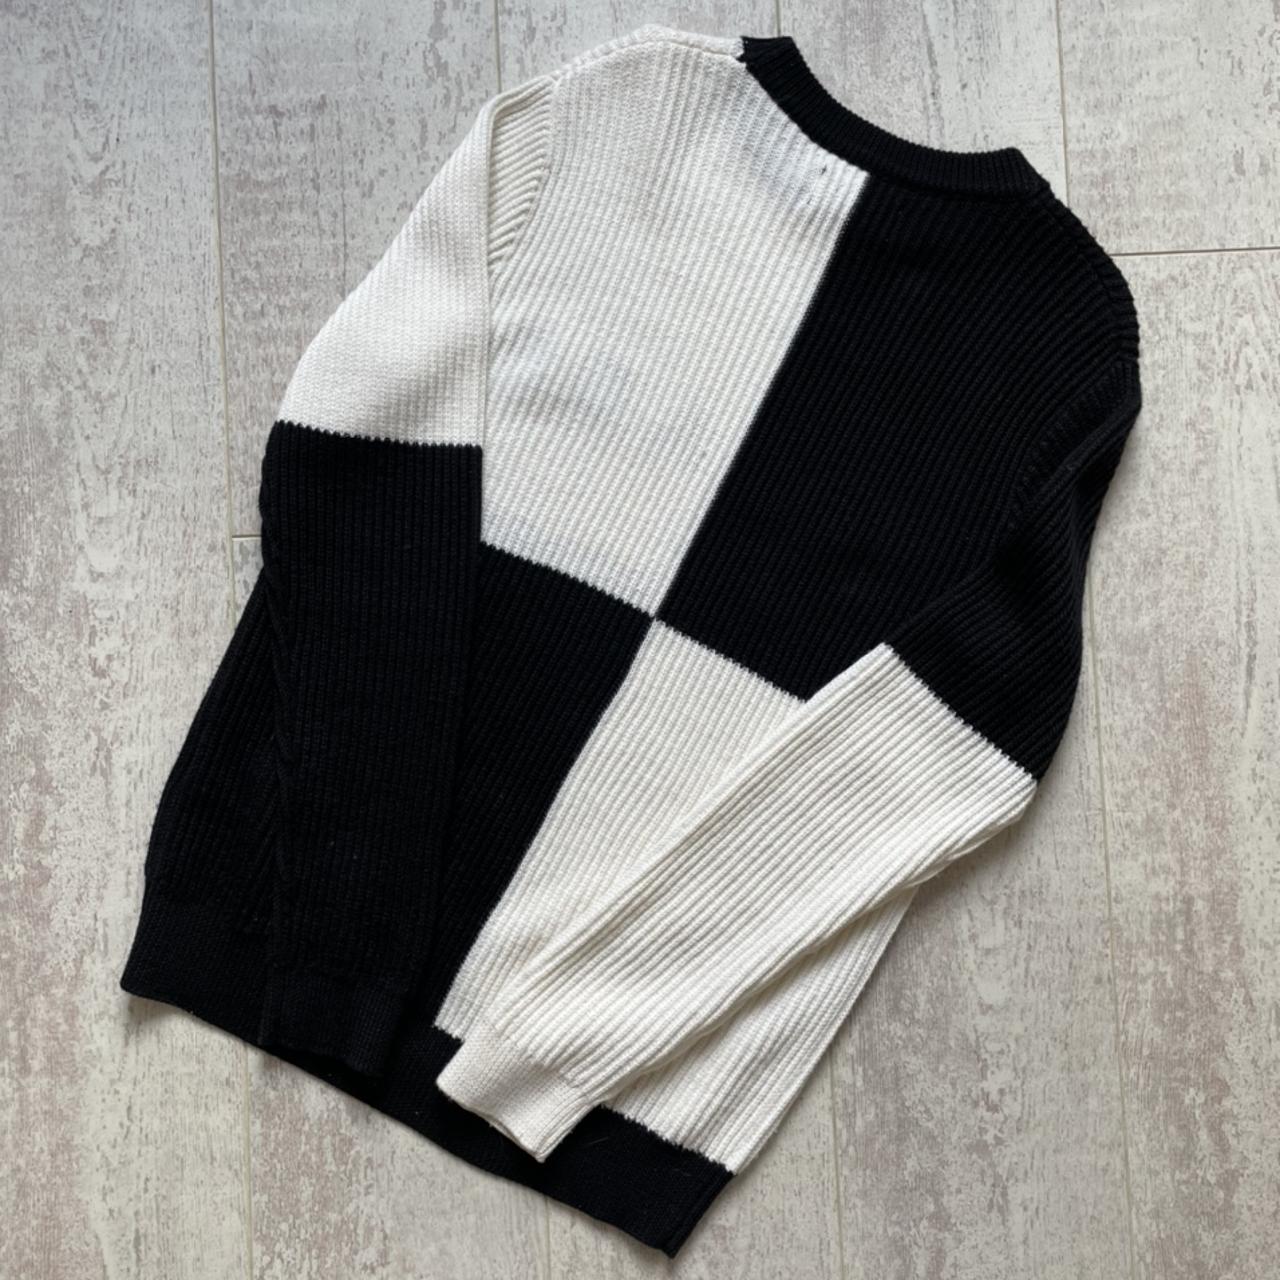 Palace Batton-Berg Knit, Black/White, Size M, 10/10